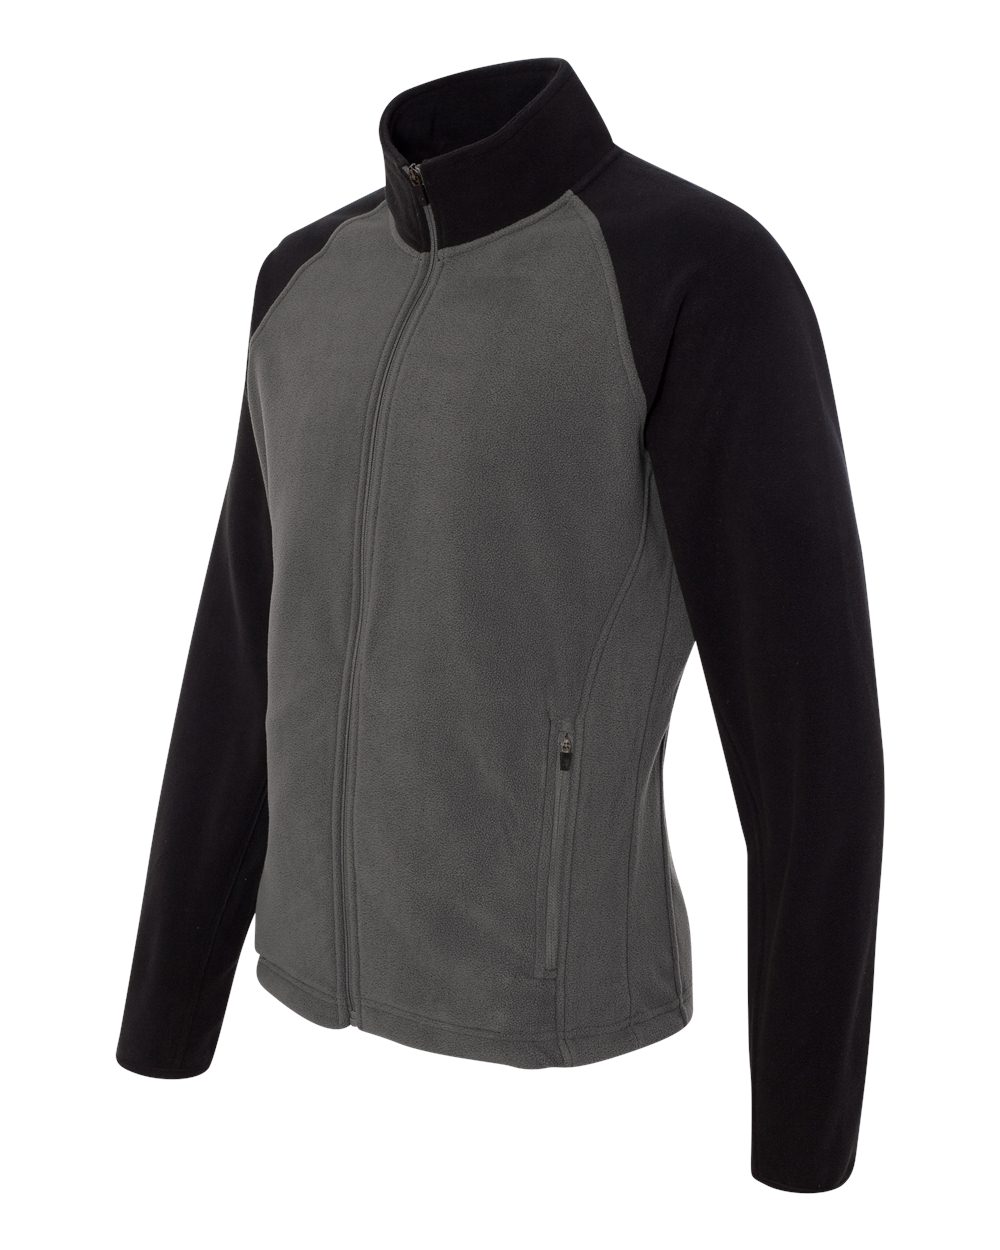 Colorado Clothing 7205 - Steamboat Microfleece Jacket